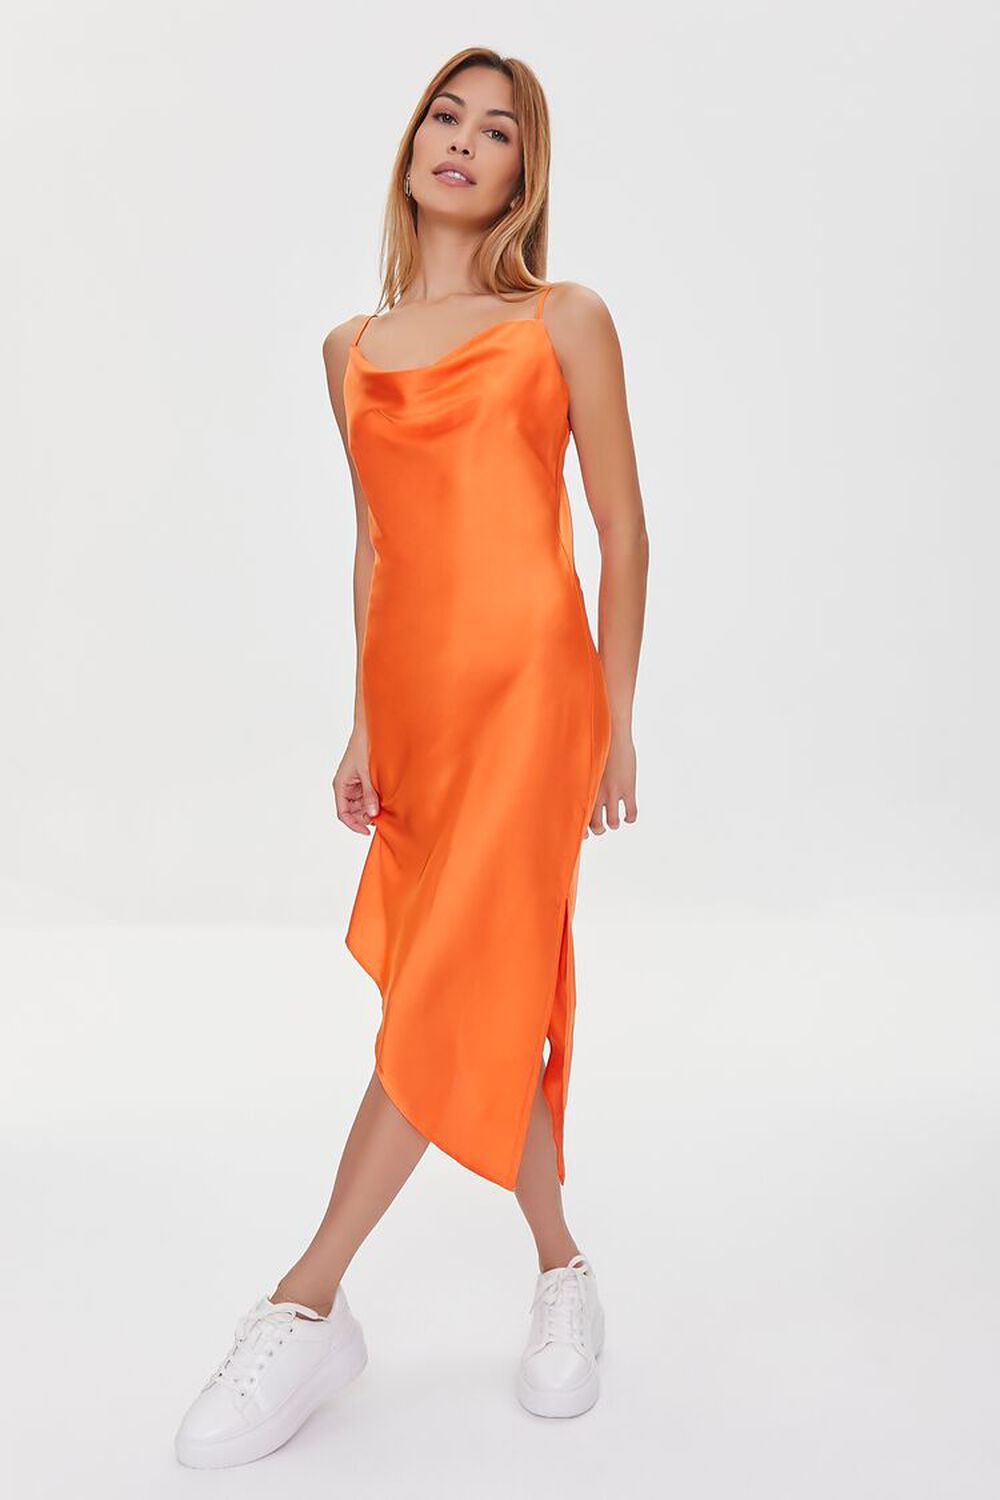 ORANGE Satin Slip Dress, image 1